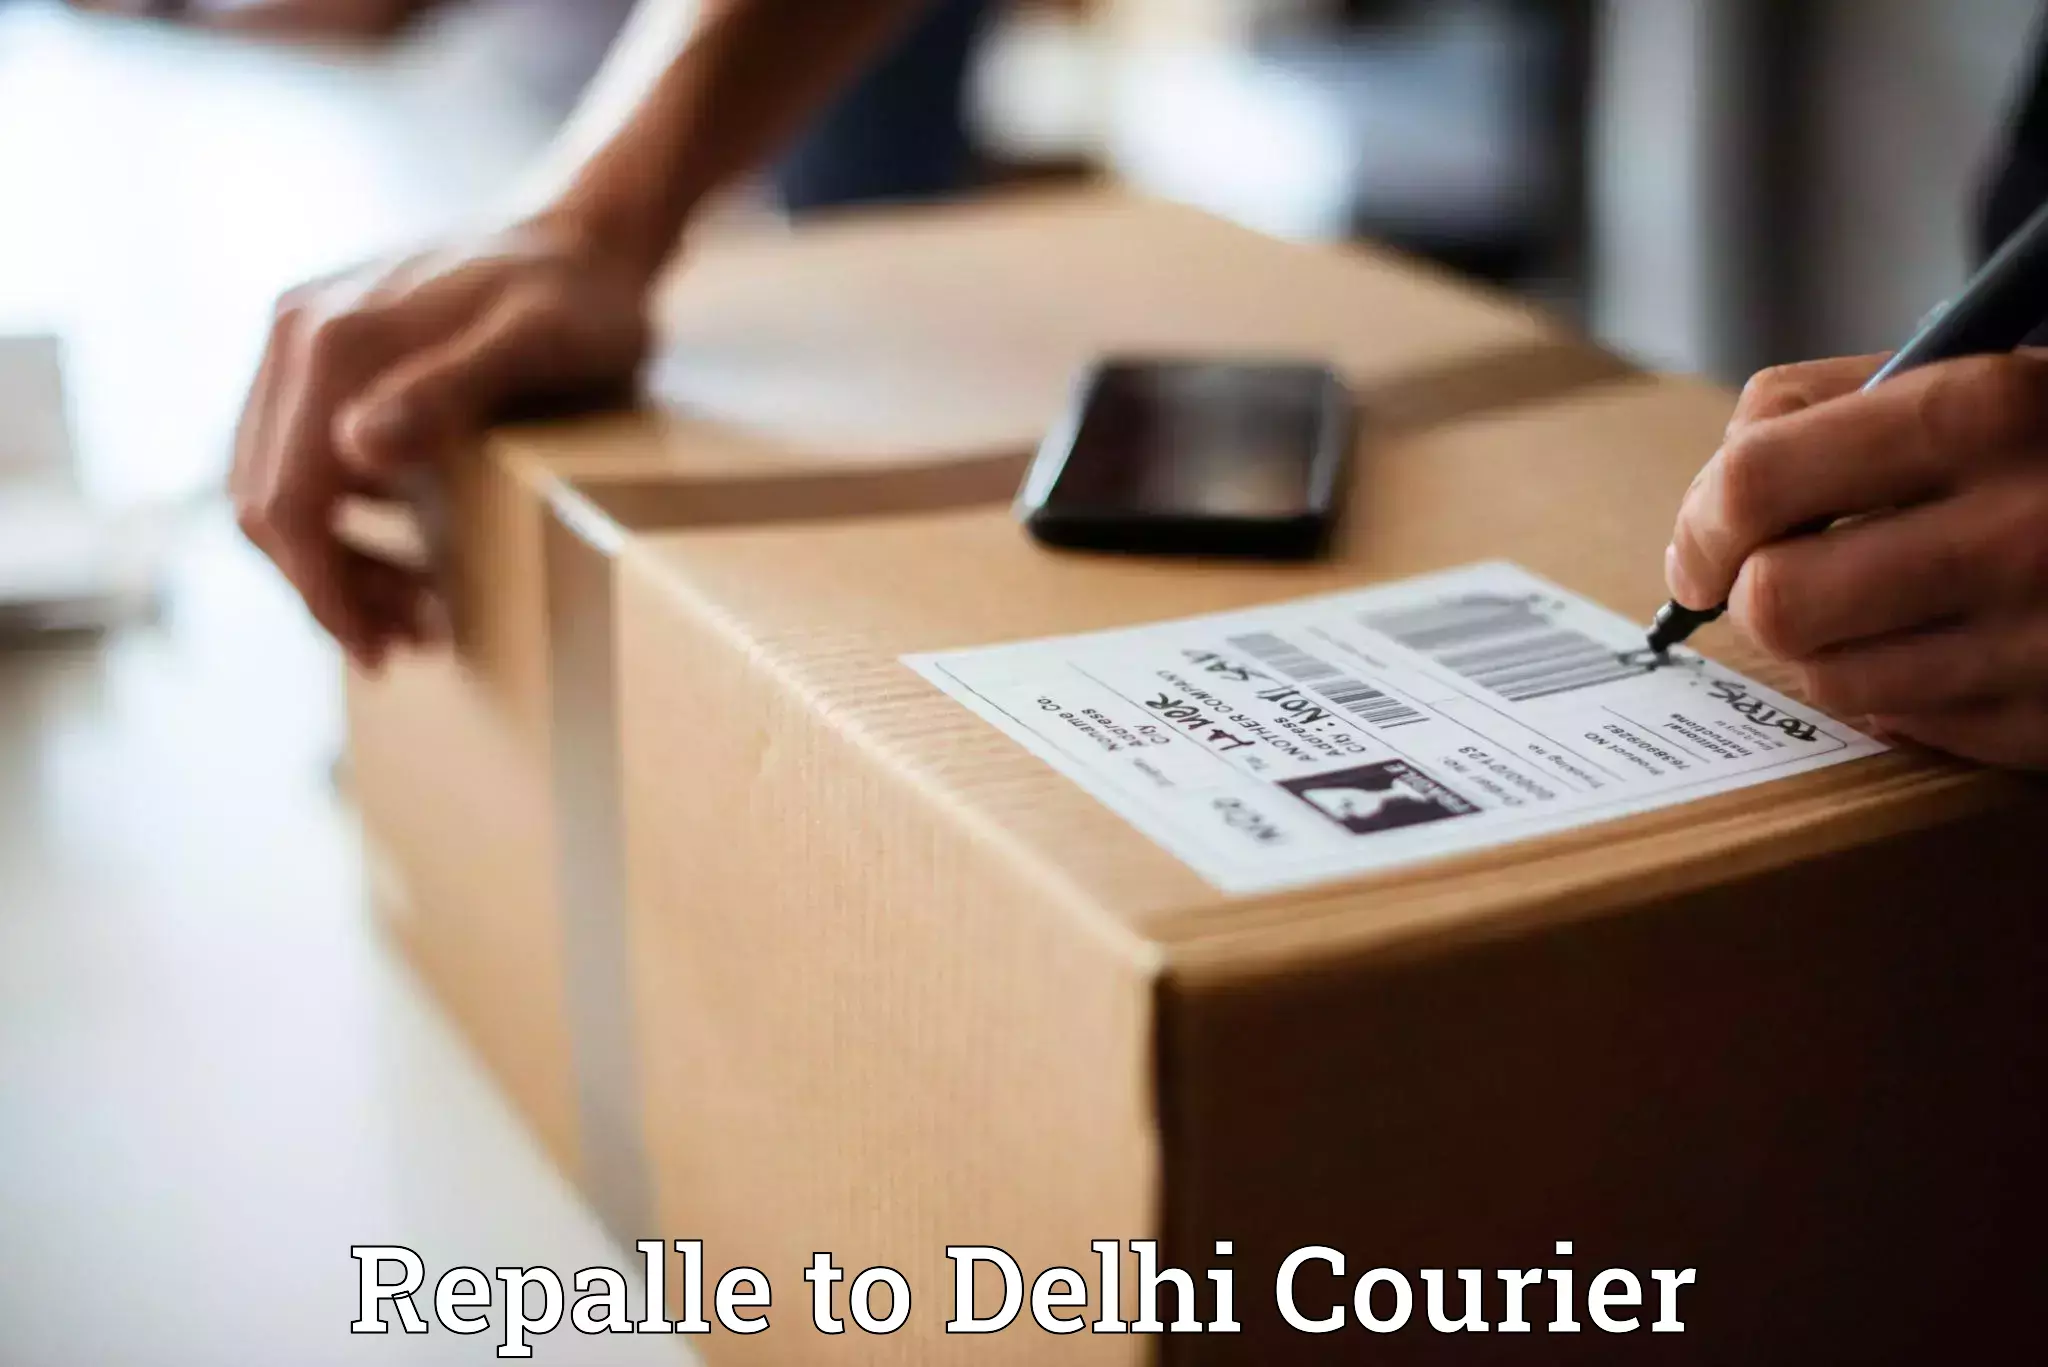 Express logistics service Repalle to Delhi